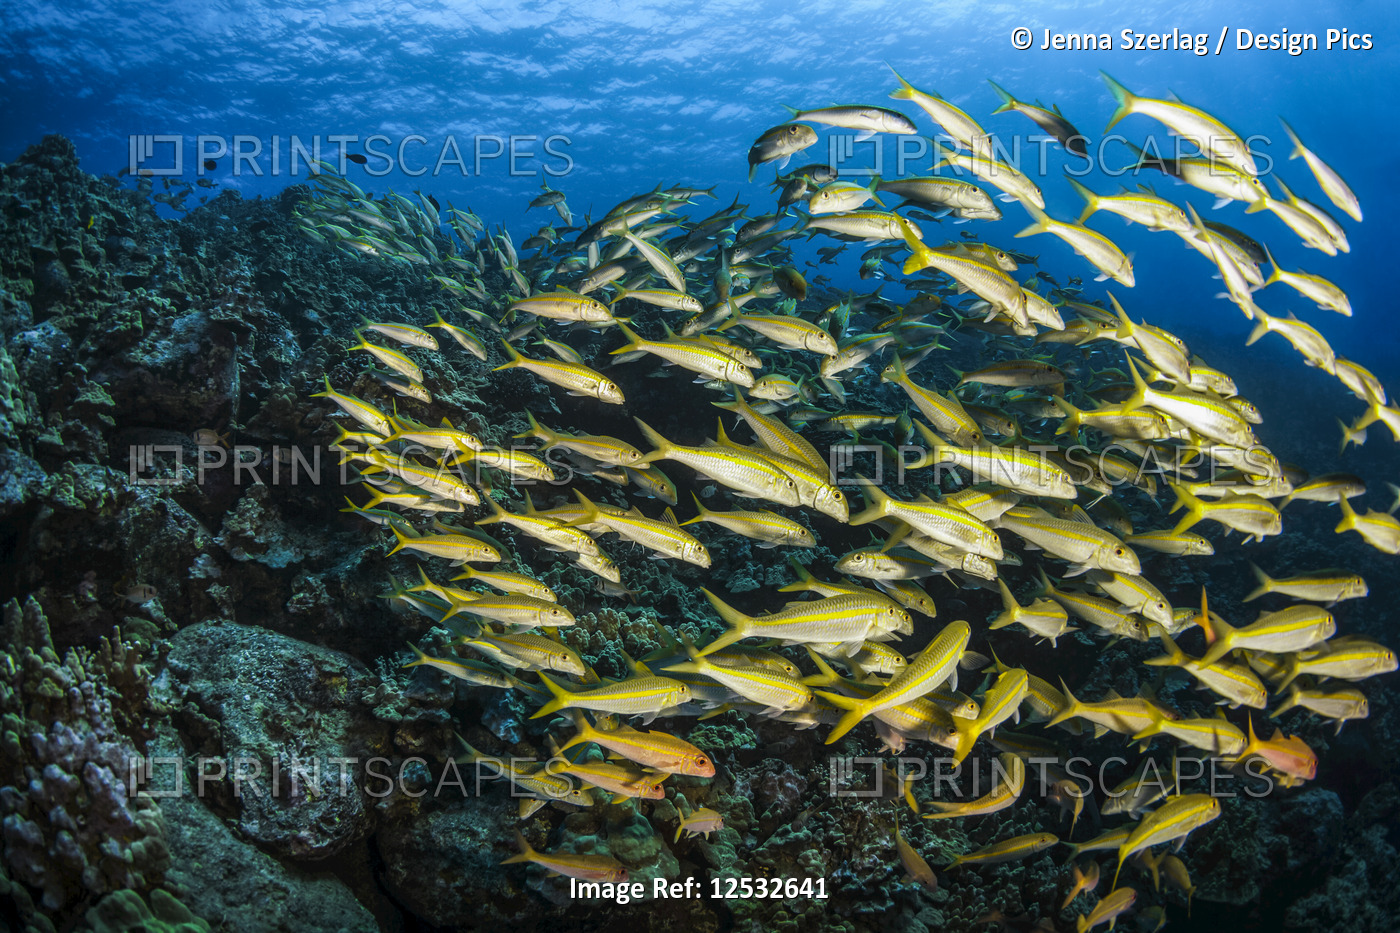 School Of Goatfish; Island of Hawaii, Hawaii, United States of America